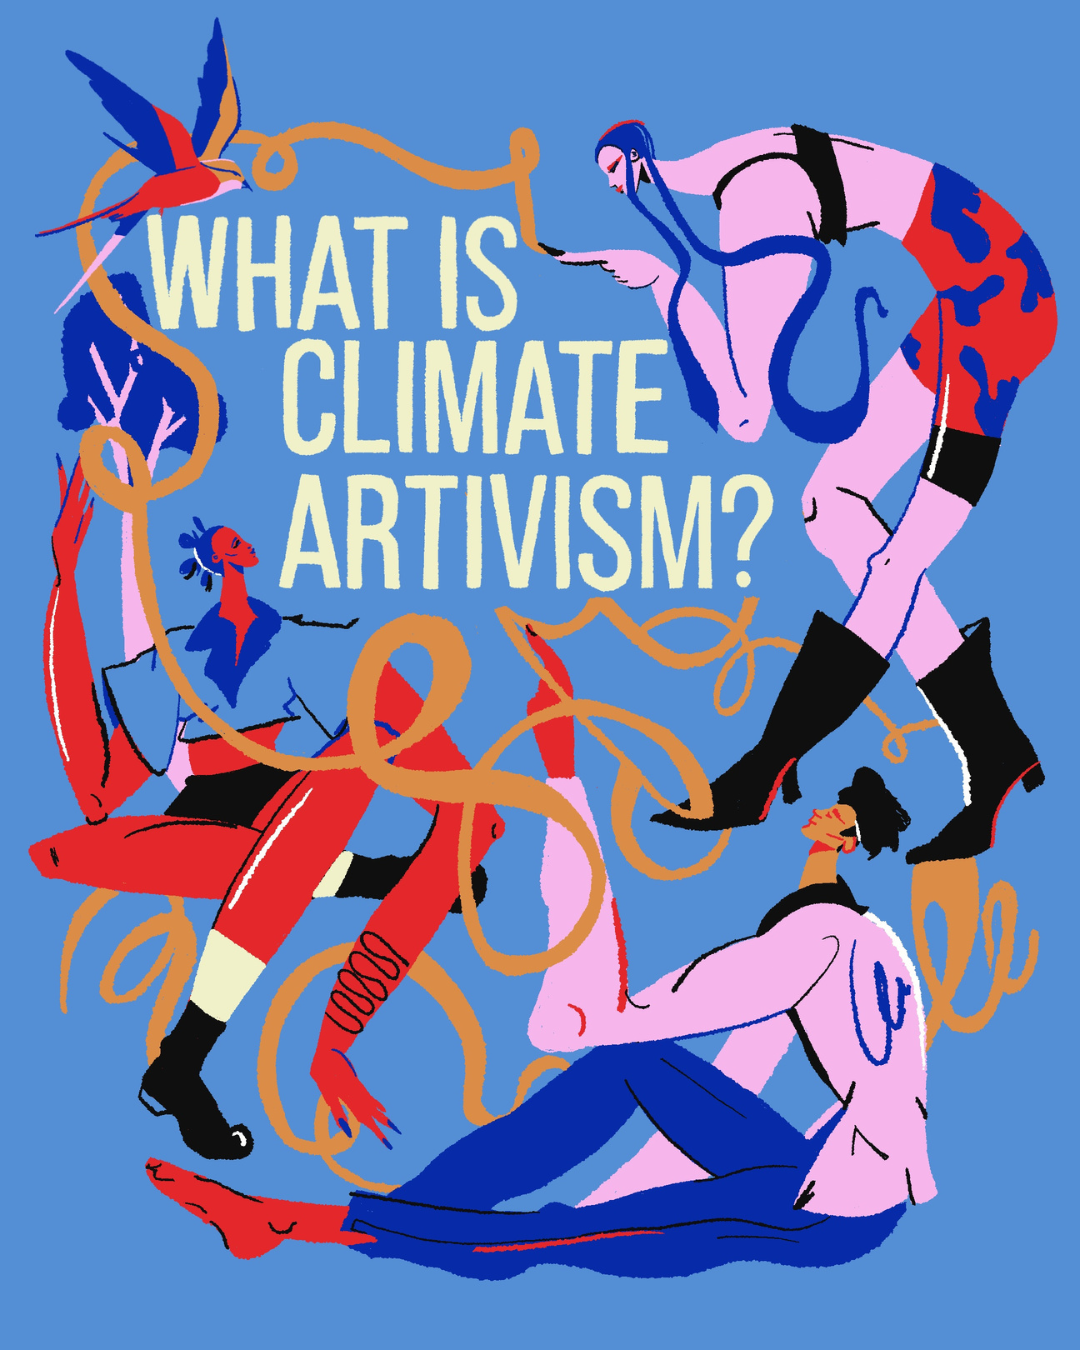 Five important dimensions of climate ARTivism